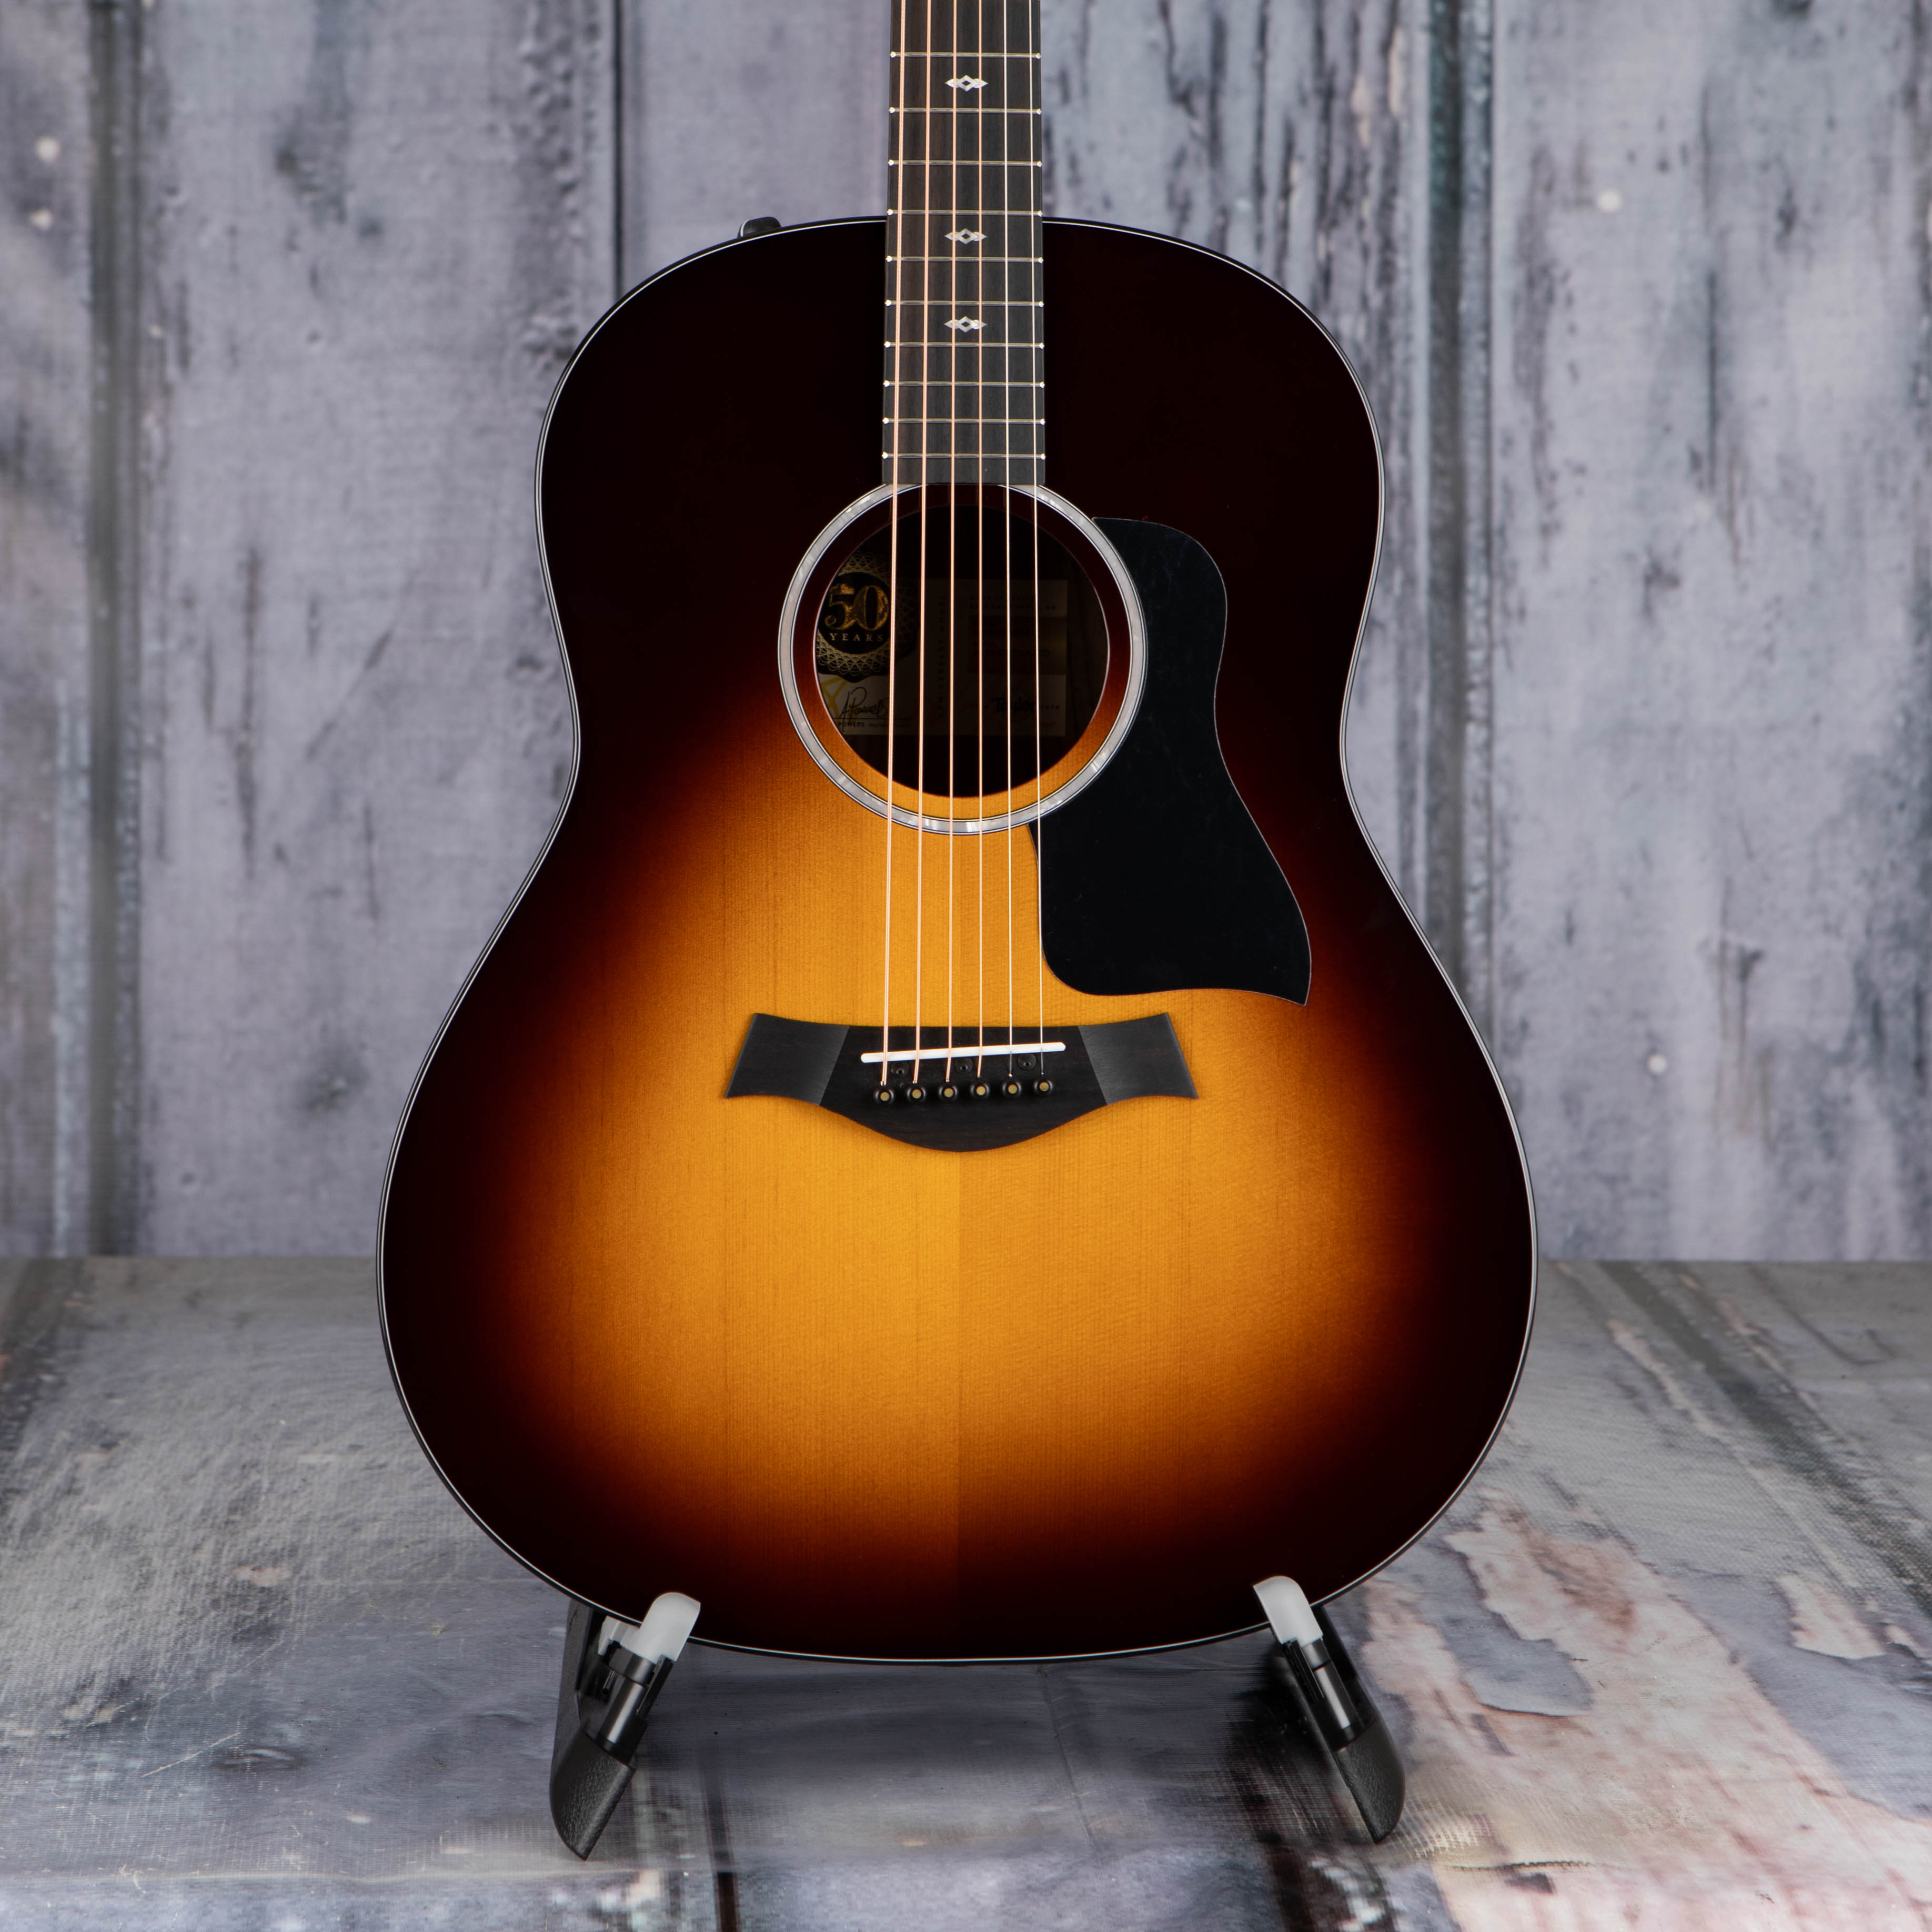 Taylor 50th Anniversary 217e-SB Plus LTD Acoustic/Electric Guitar, Tobacco Sunburst, front closeup